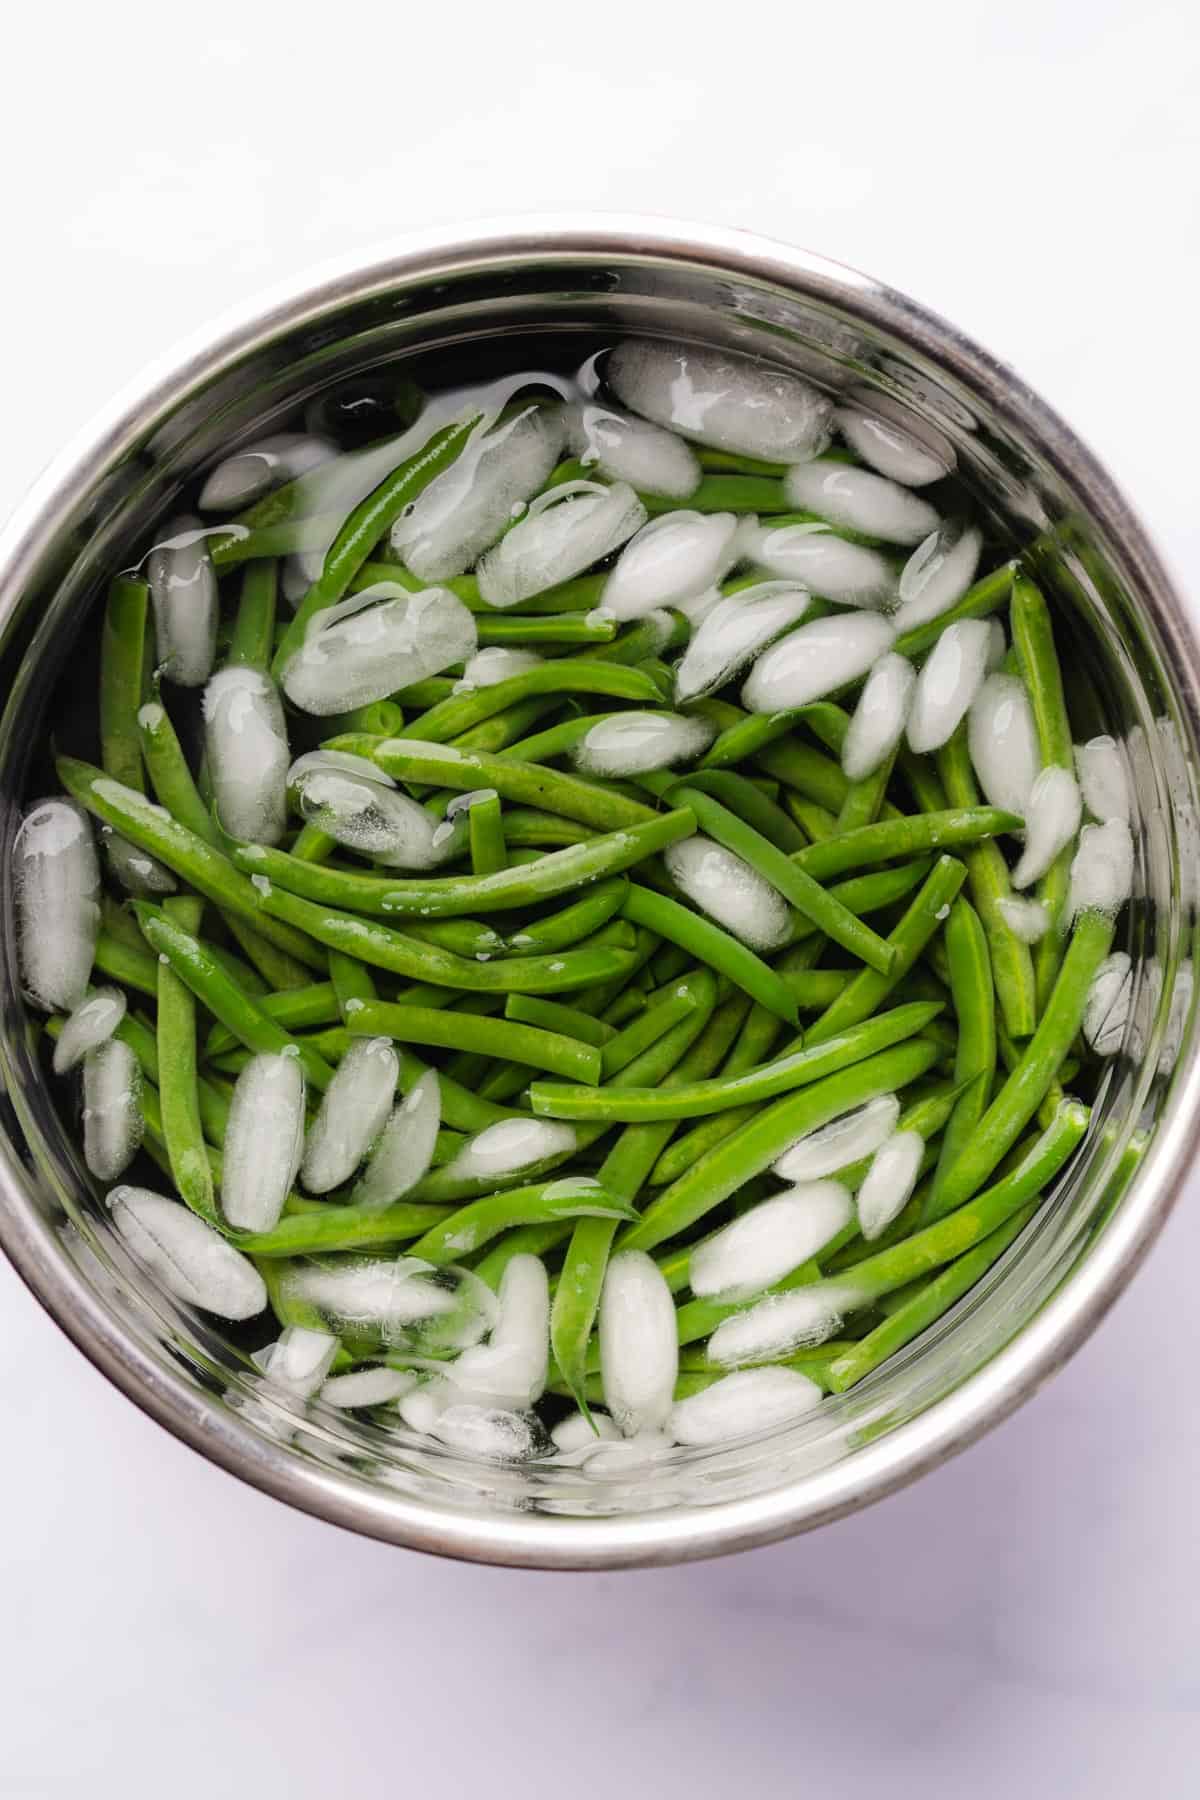 vibrant fresh green beans in an ice bath